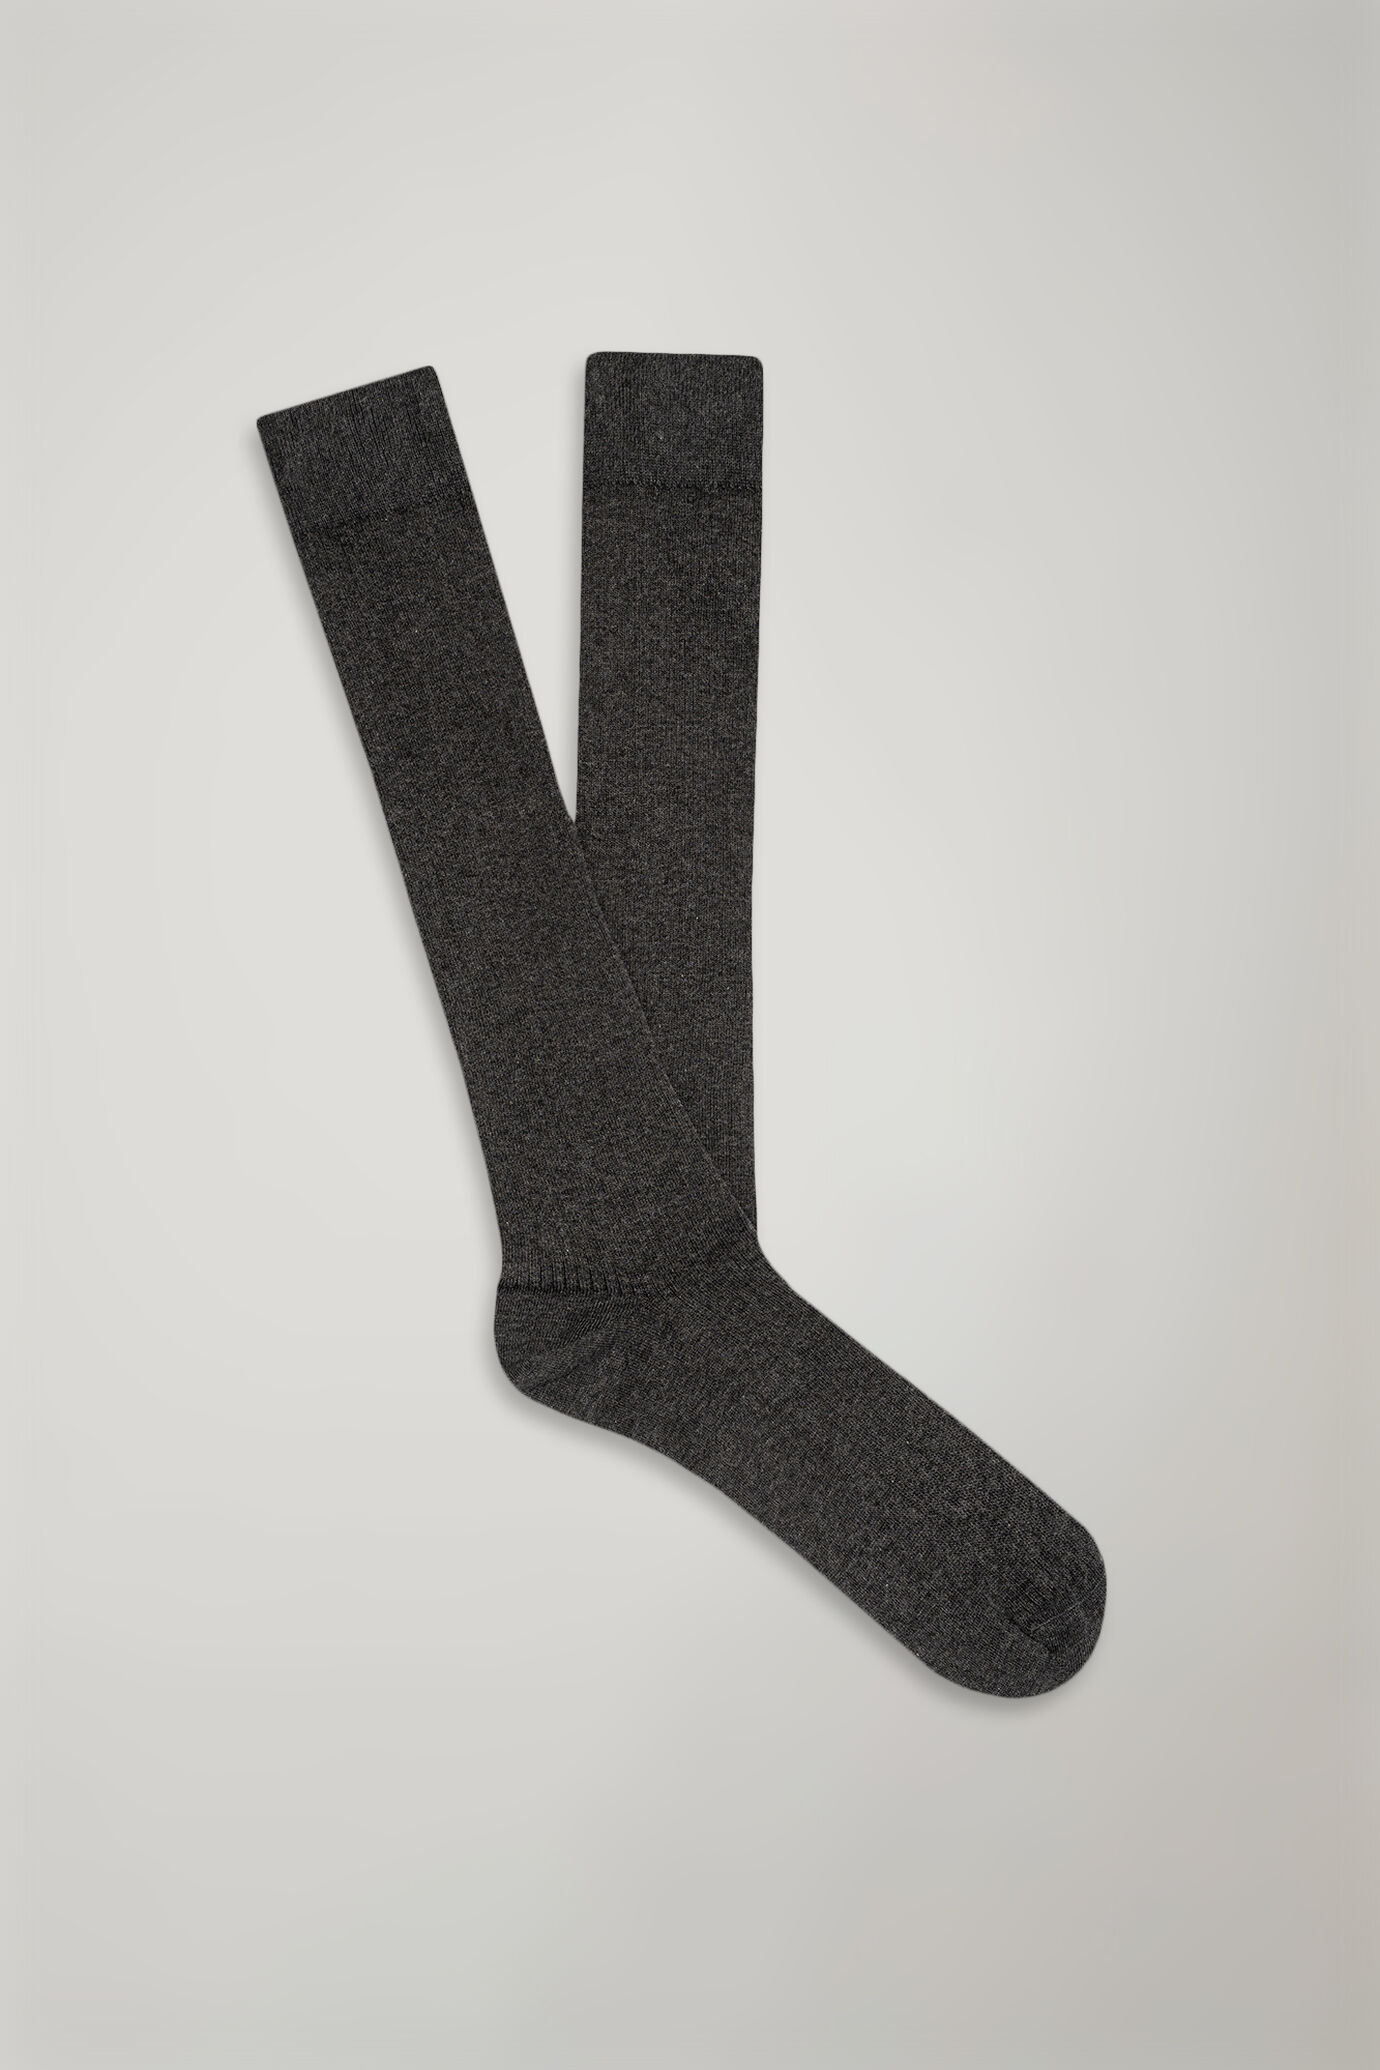 Men’s long sock in solid color ribbed knit